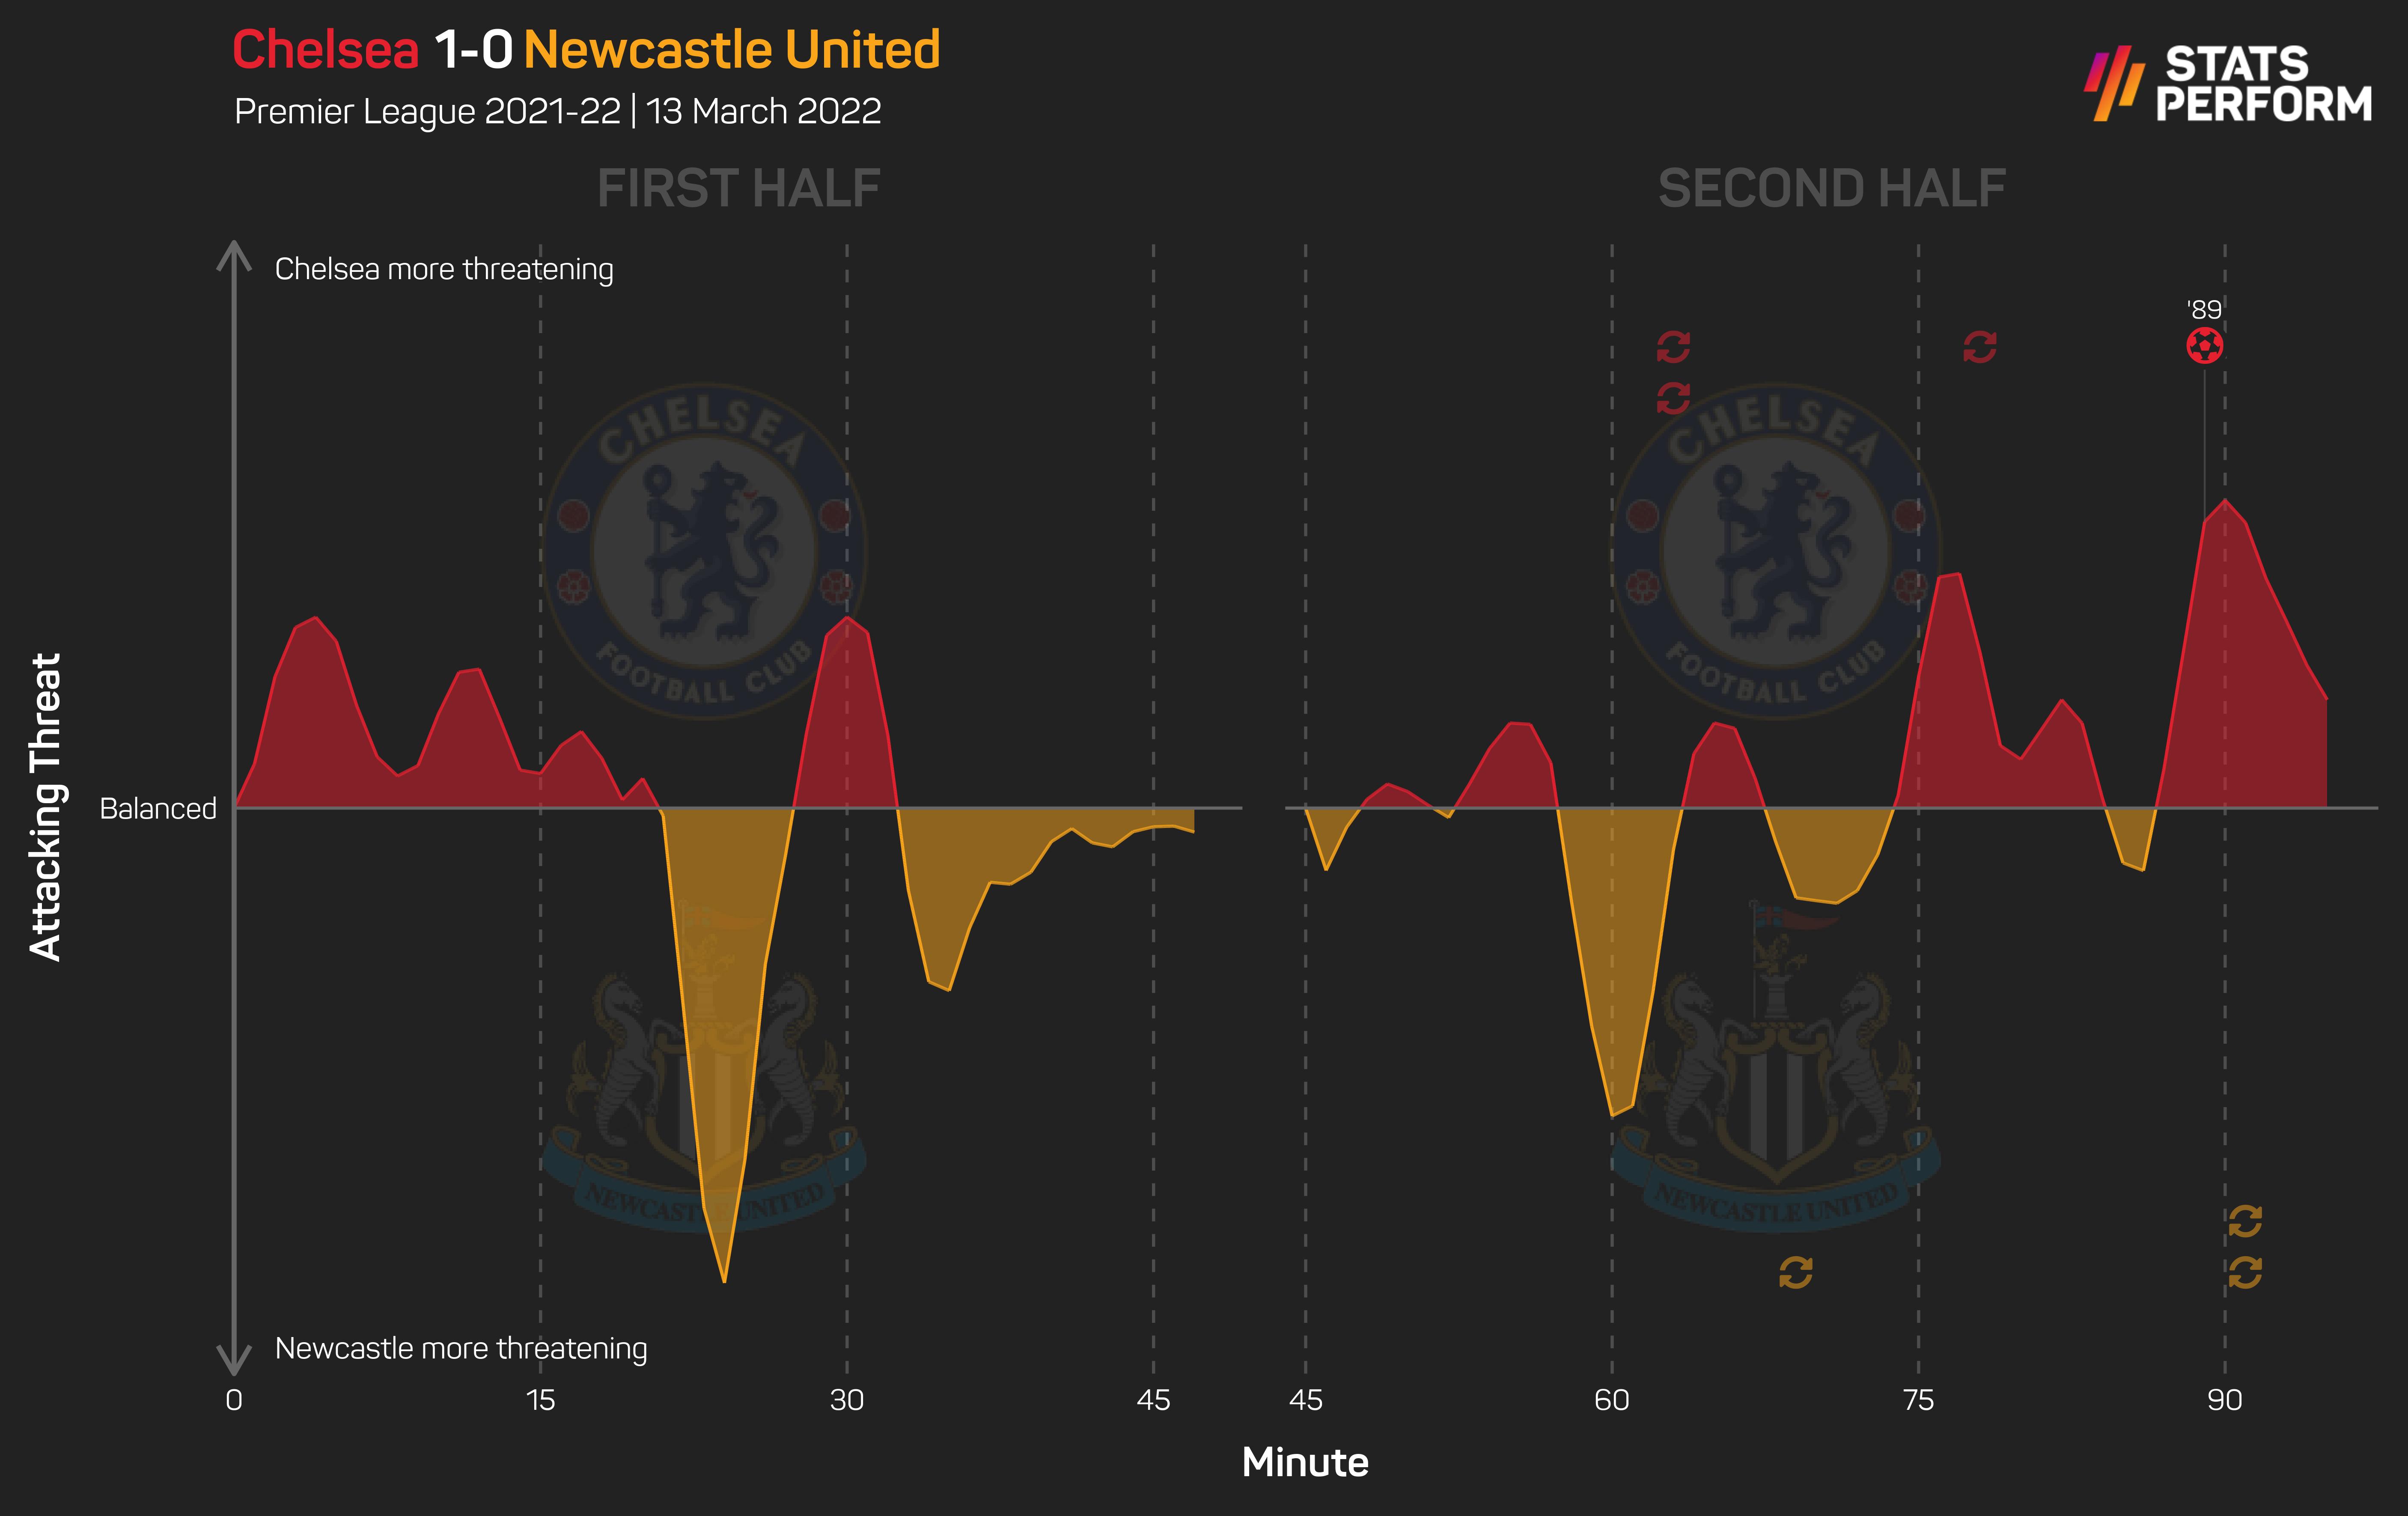 Chelsea 1-0 Newcastle United momentum